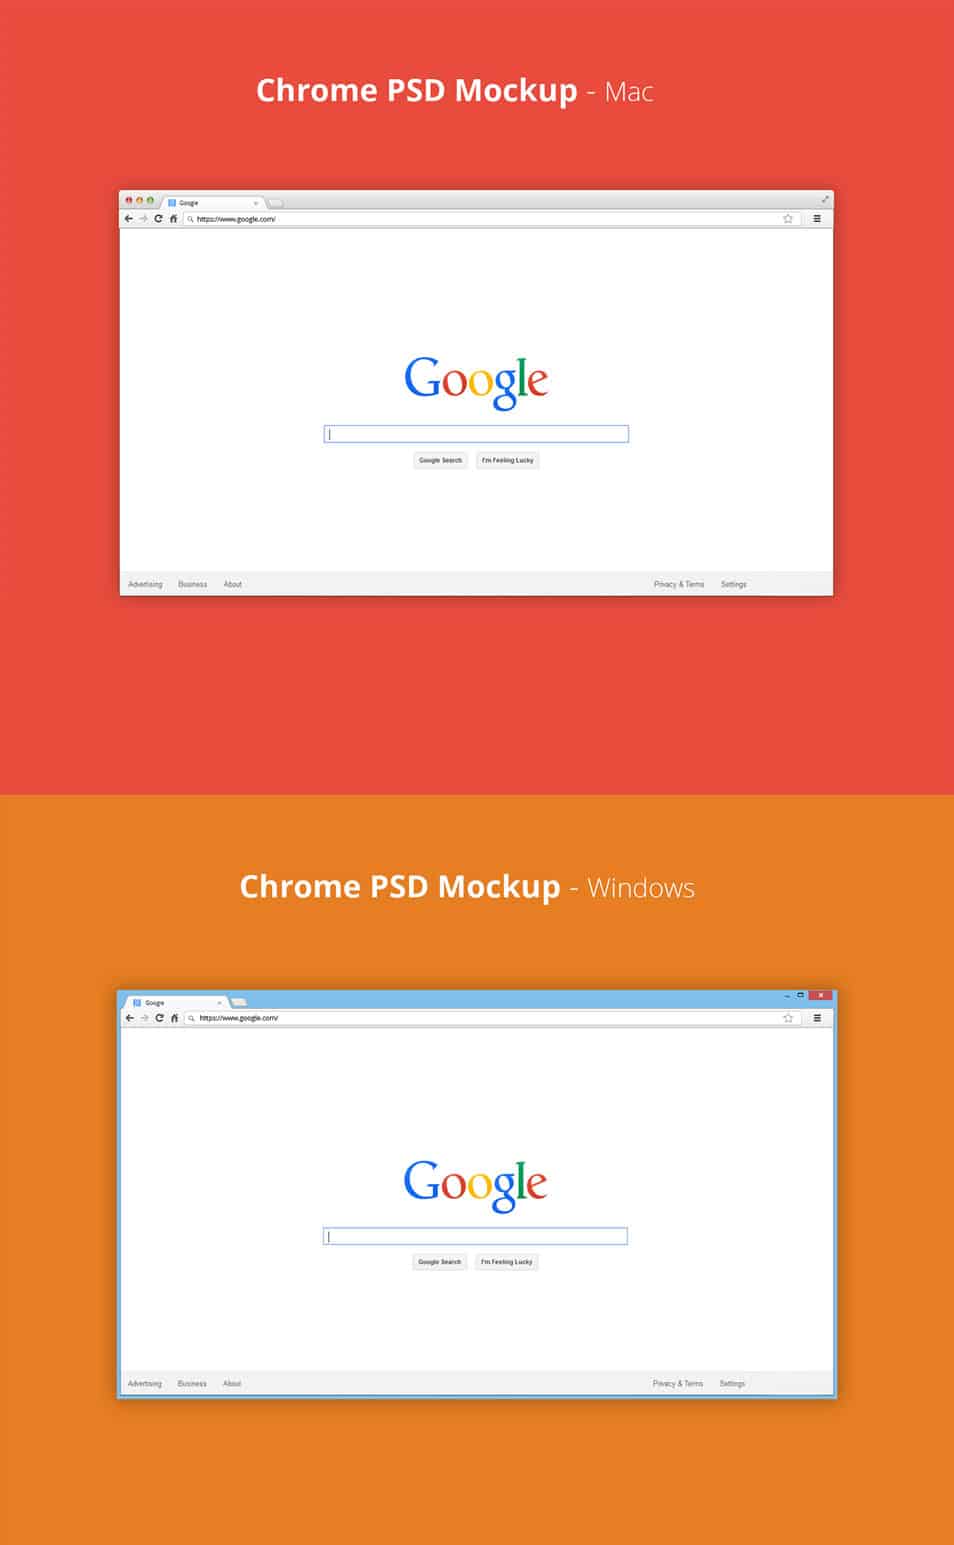 Chrome PSD Mockup – Mac & Windows